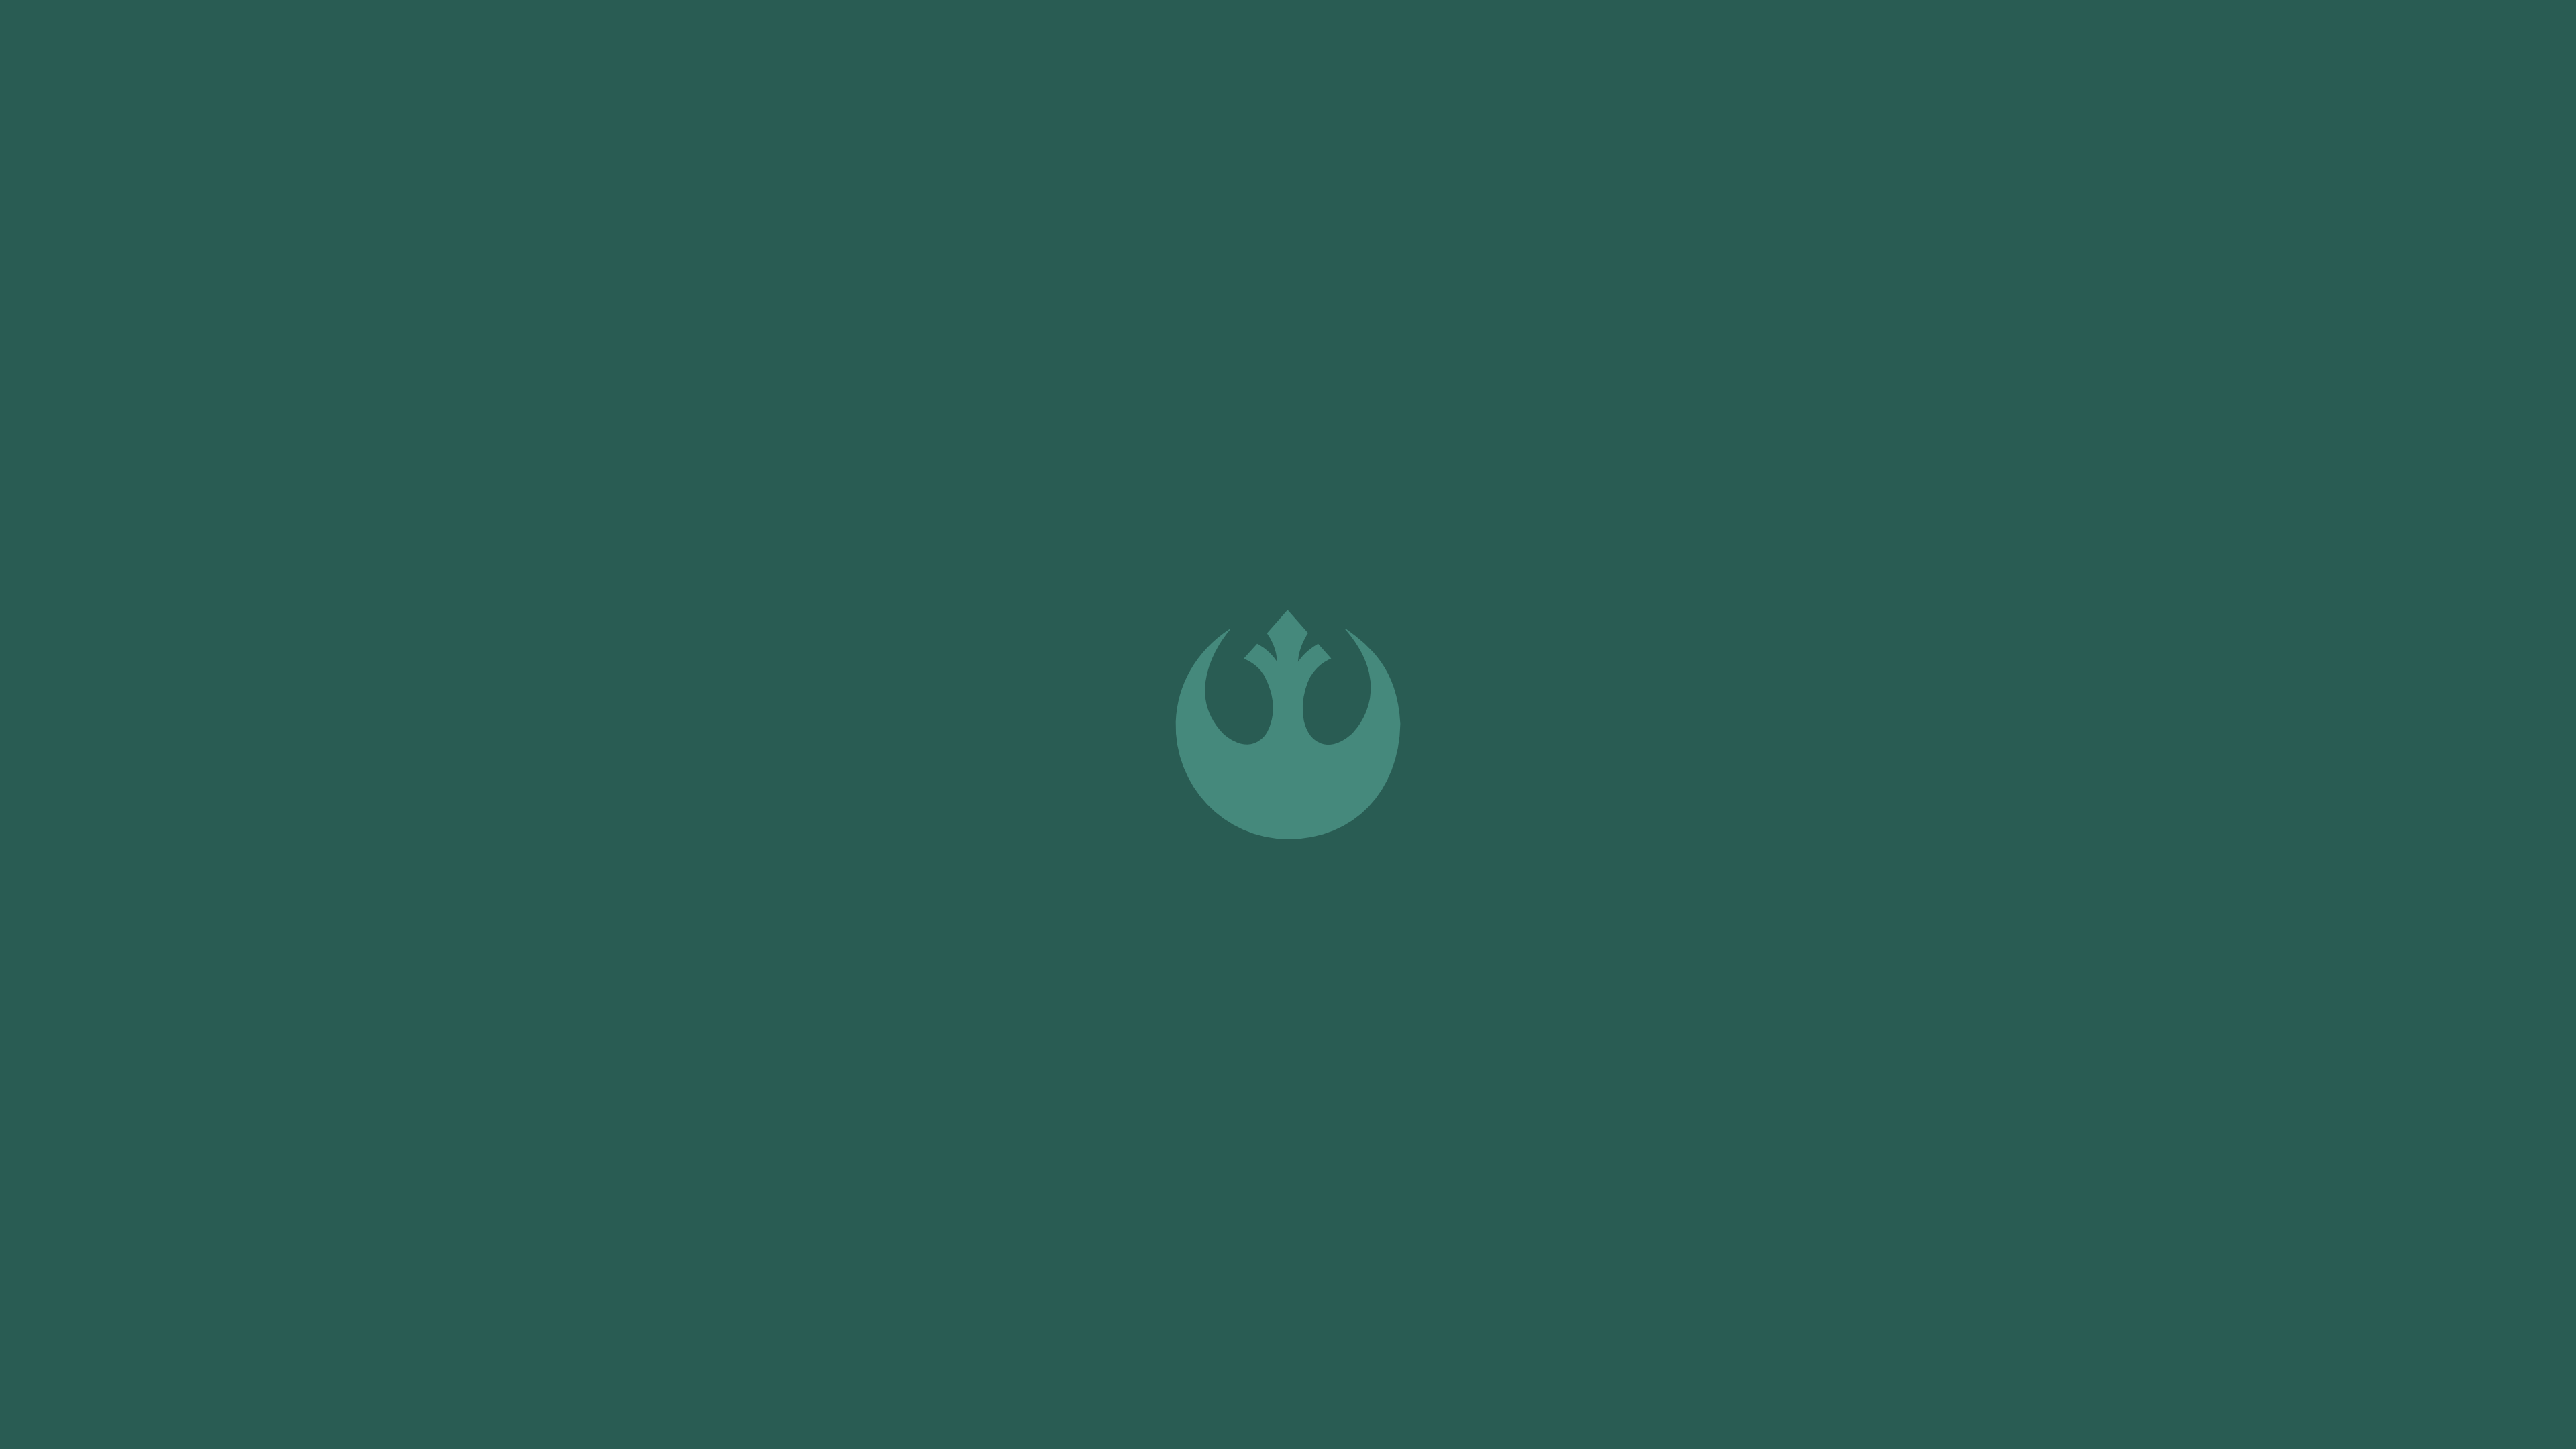 General 3840x2160 Star Wars Rebel Alliance minimalism digital art simple background logo